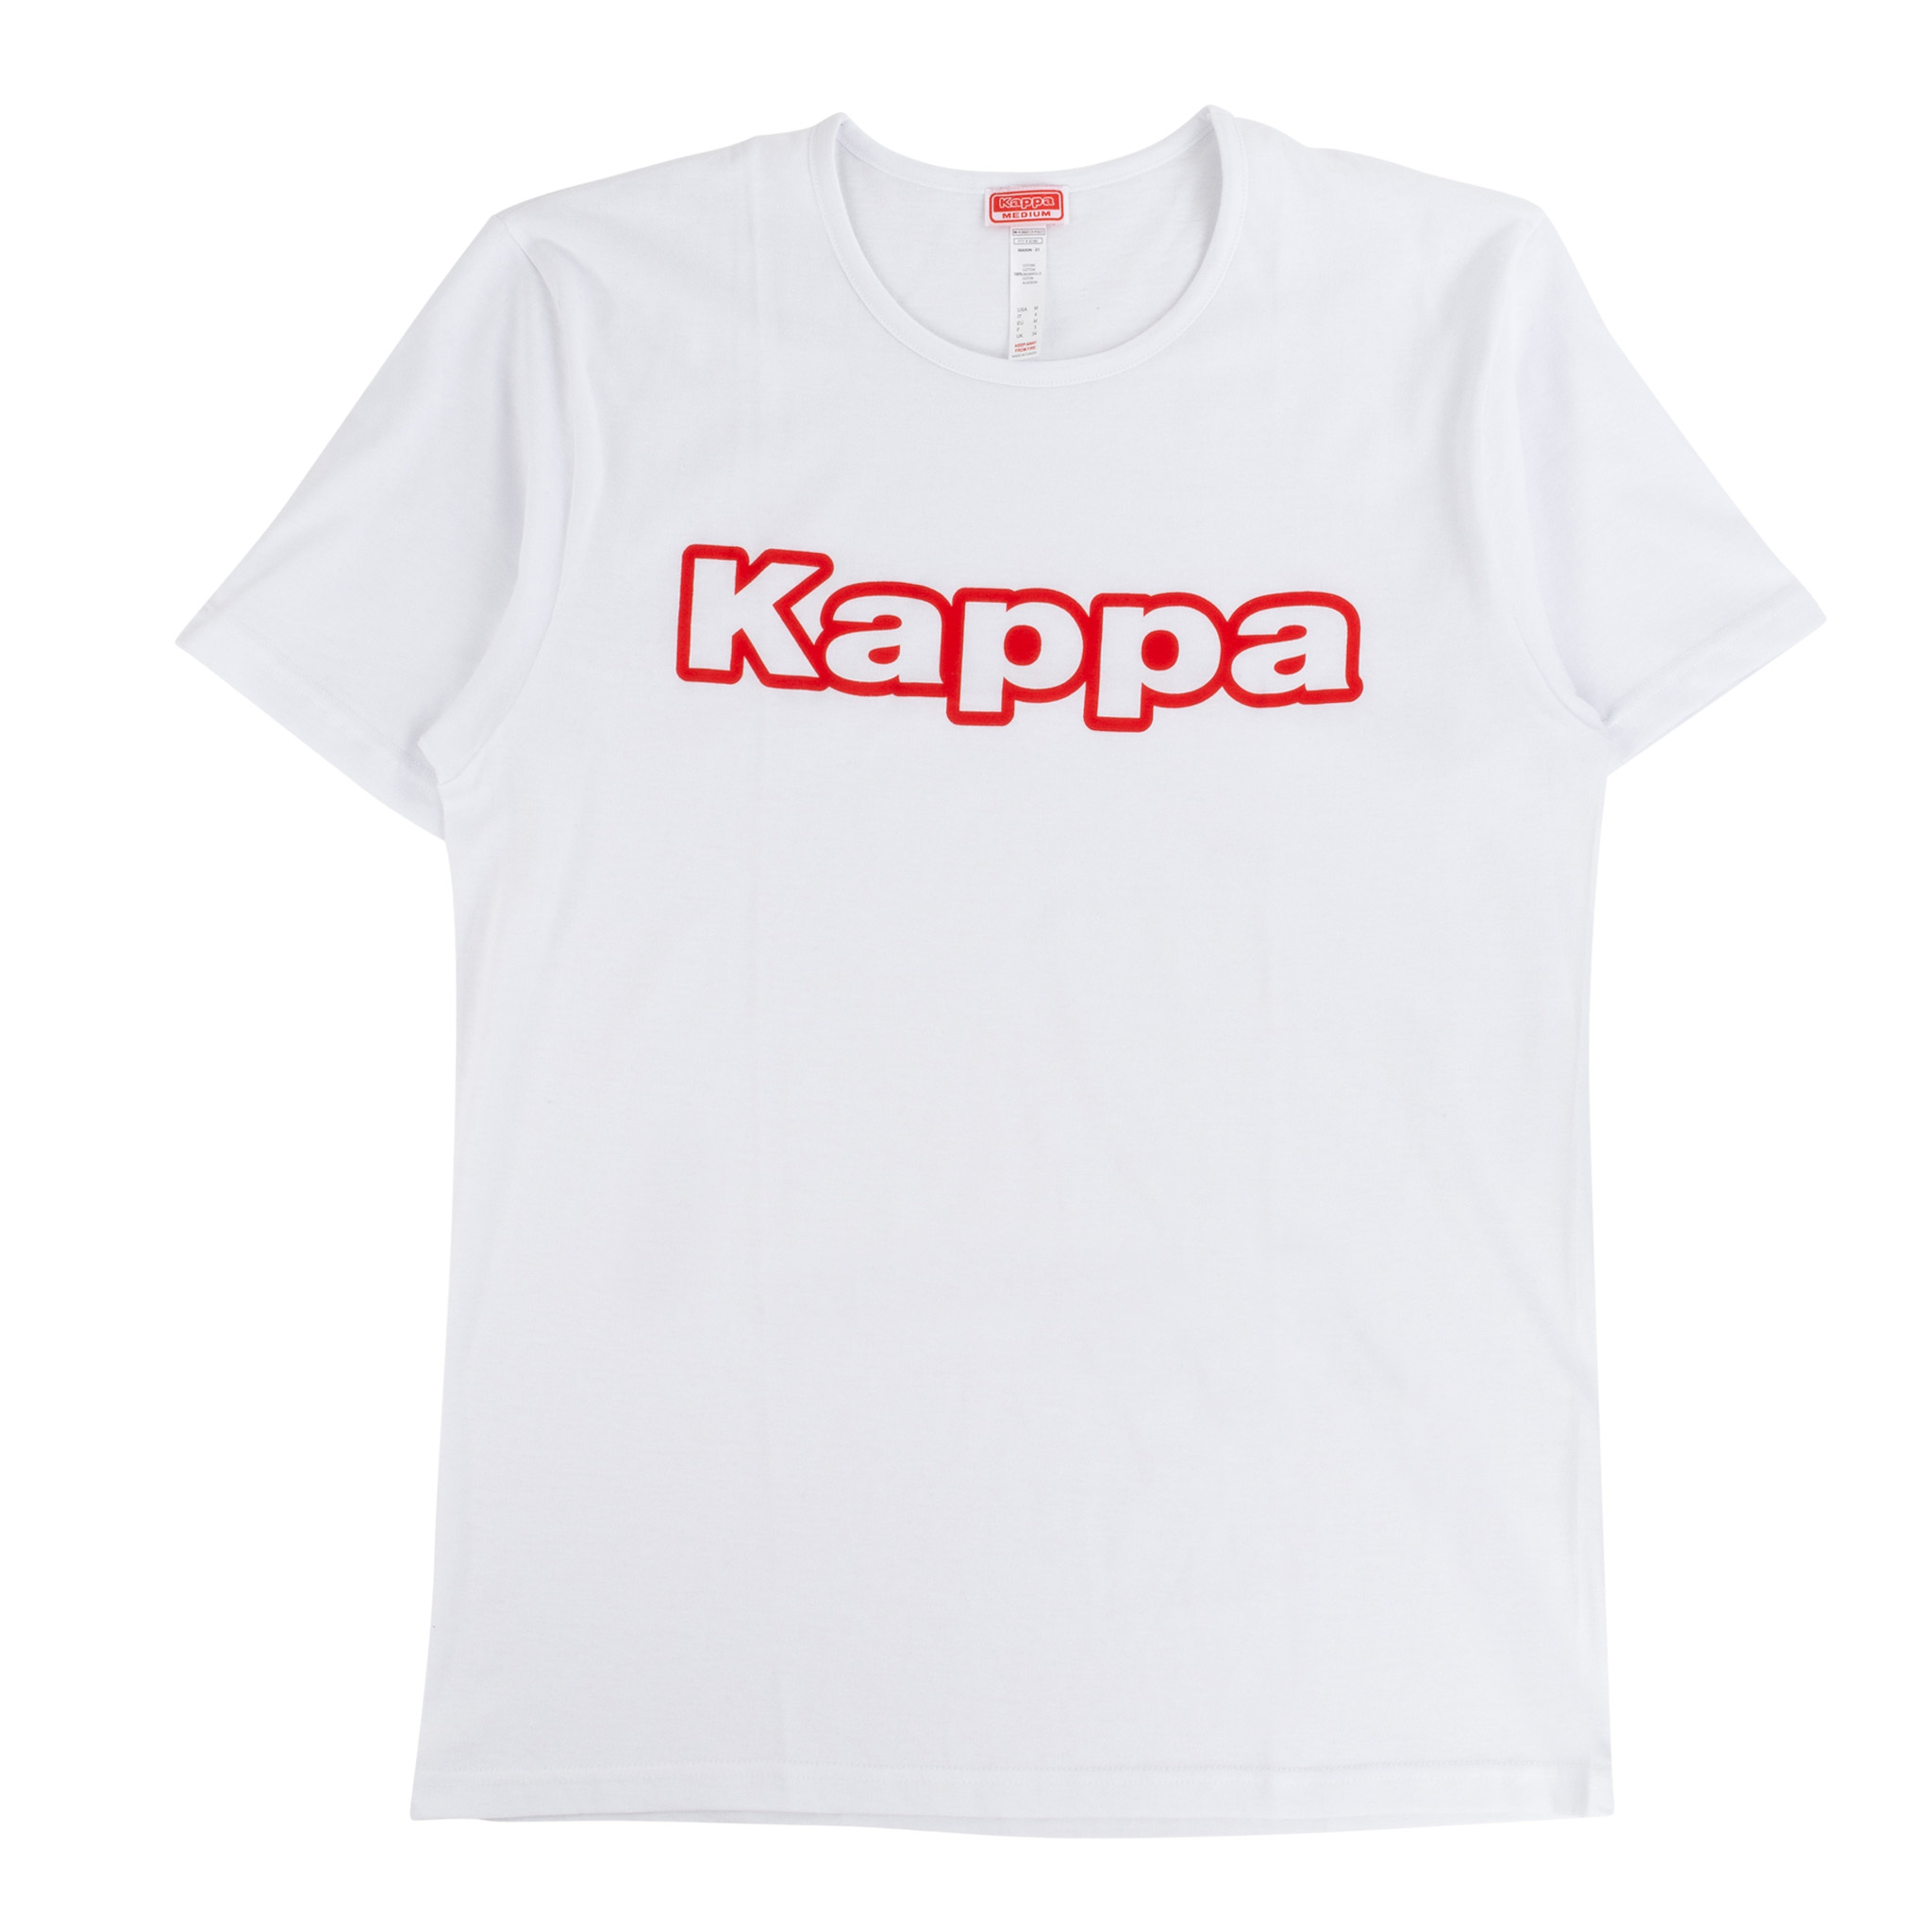 kappa - T-shirt